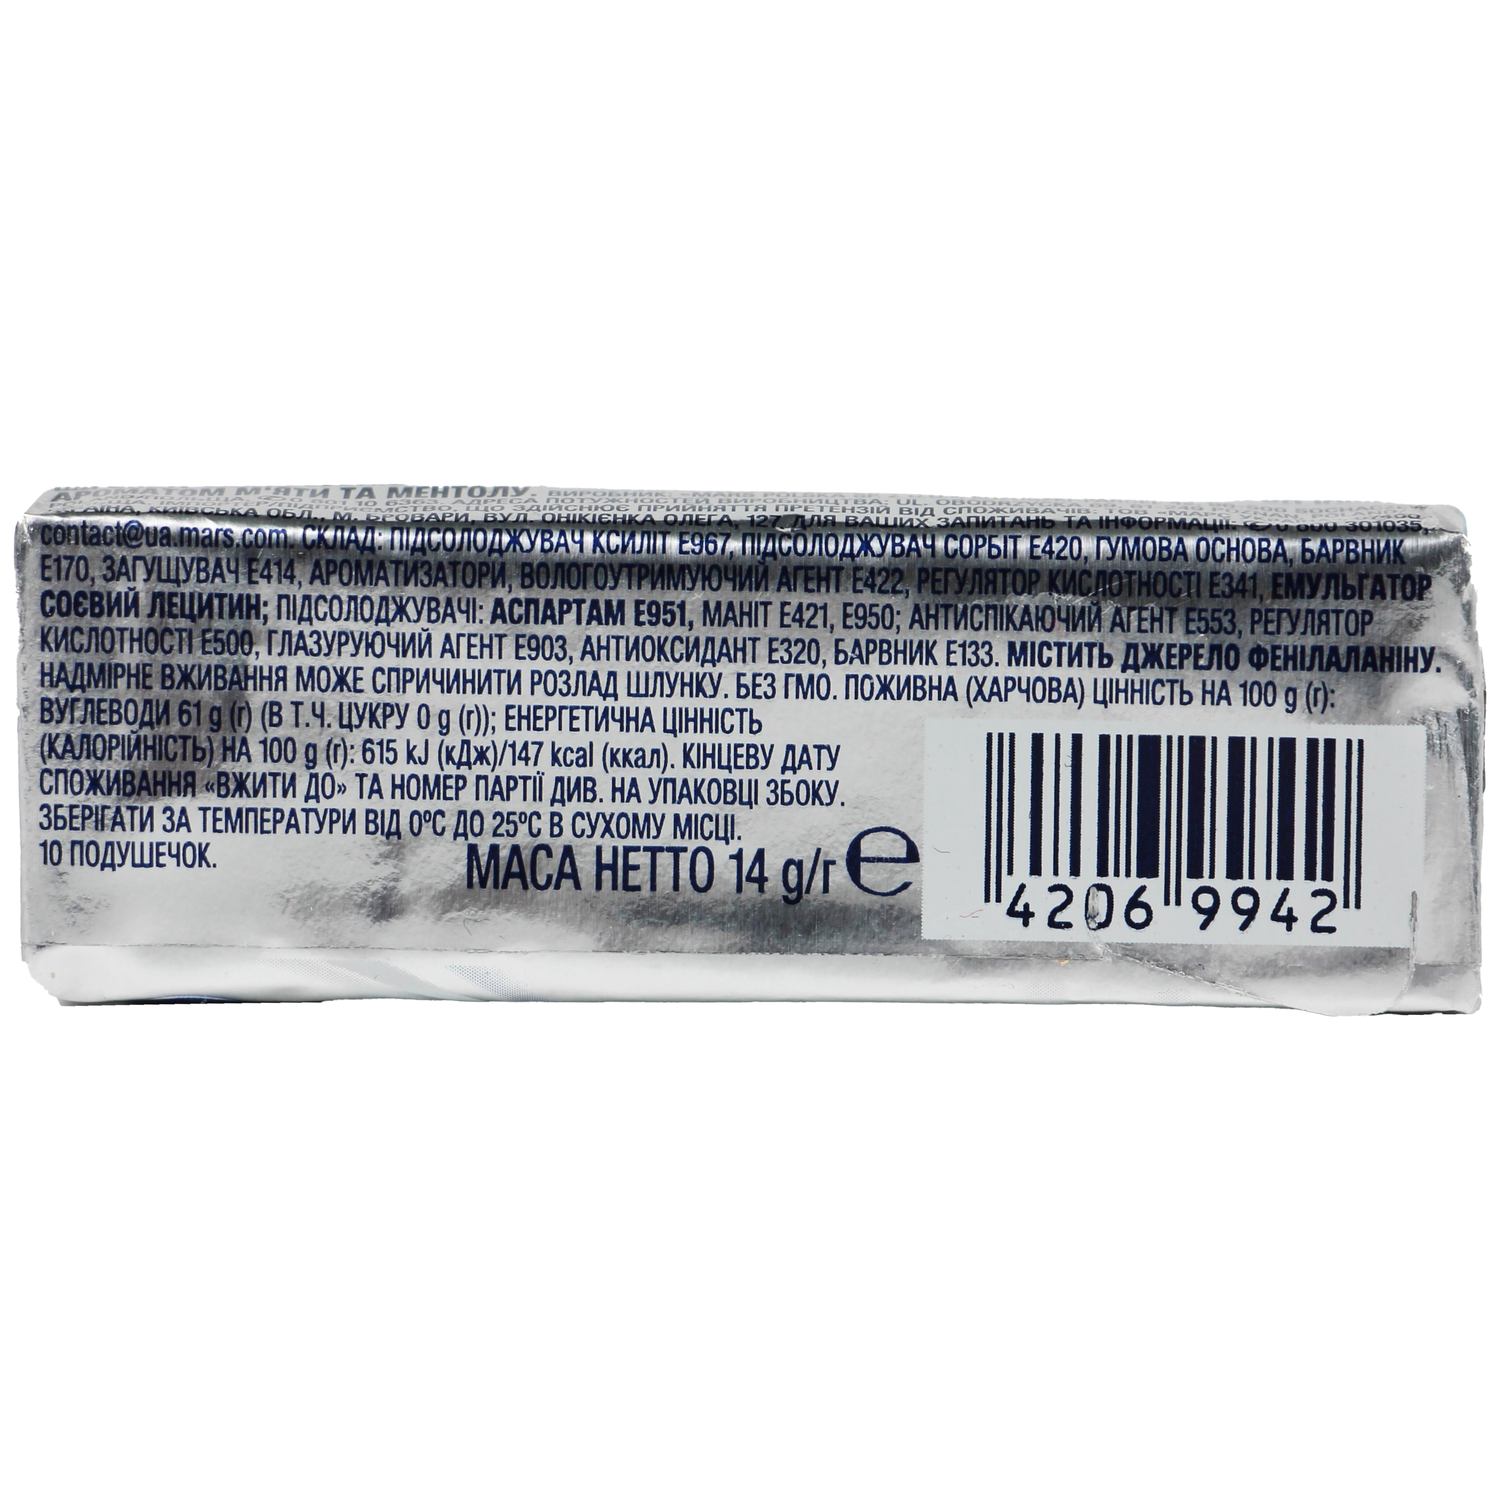 Orbit White Freshmint Chewing Gum 14g 2